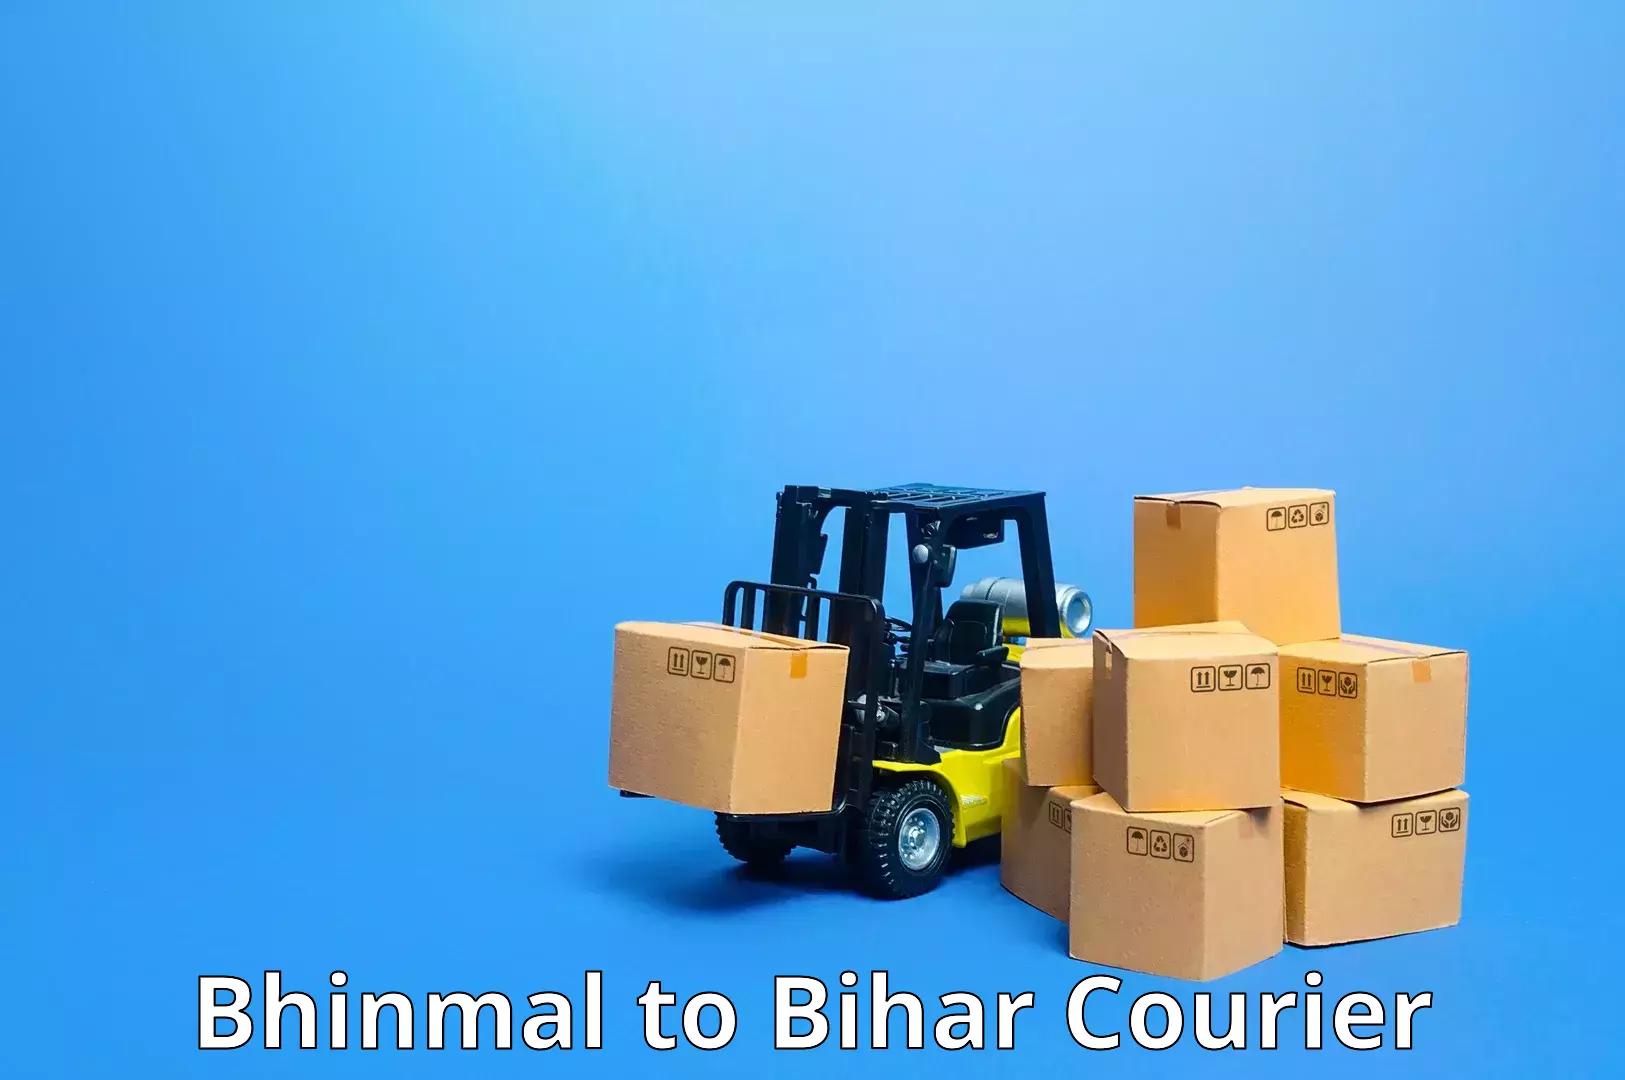 Logistics service provider Bhinmal to Rajpur